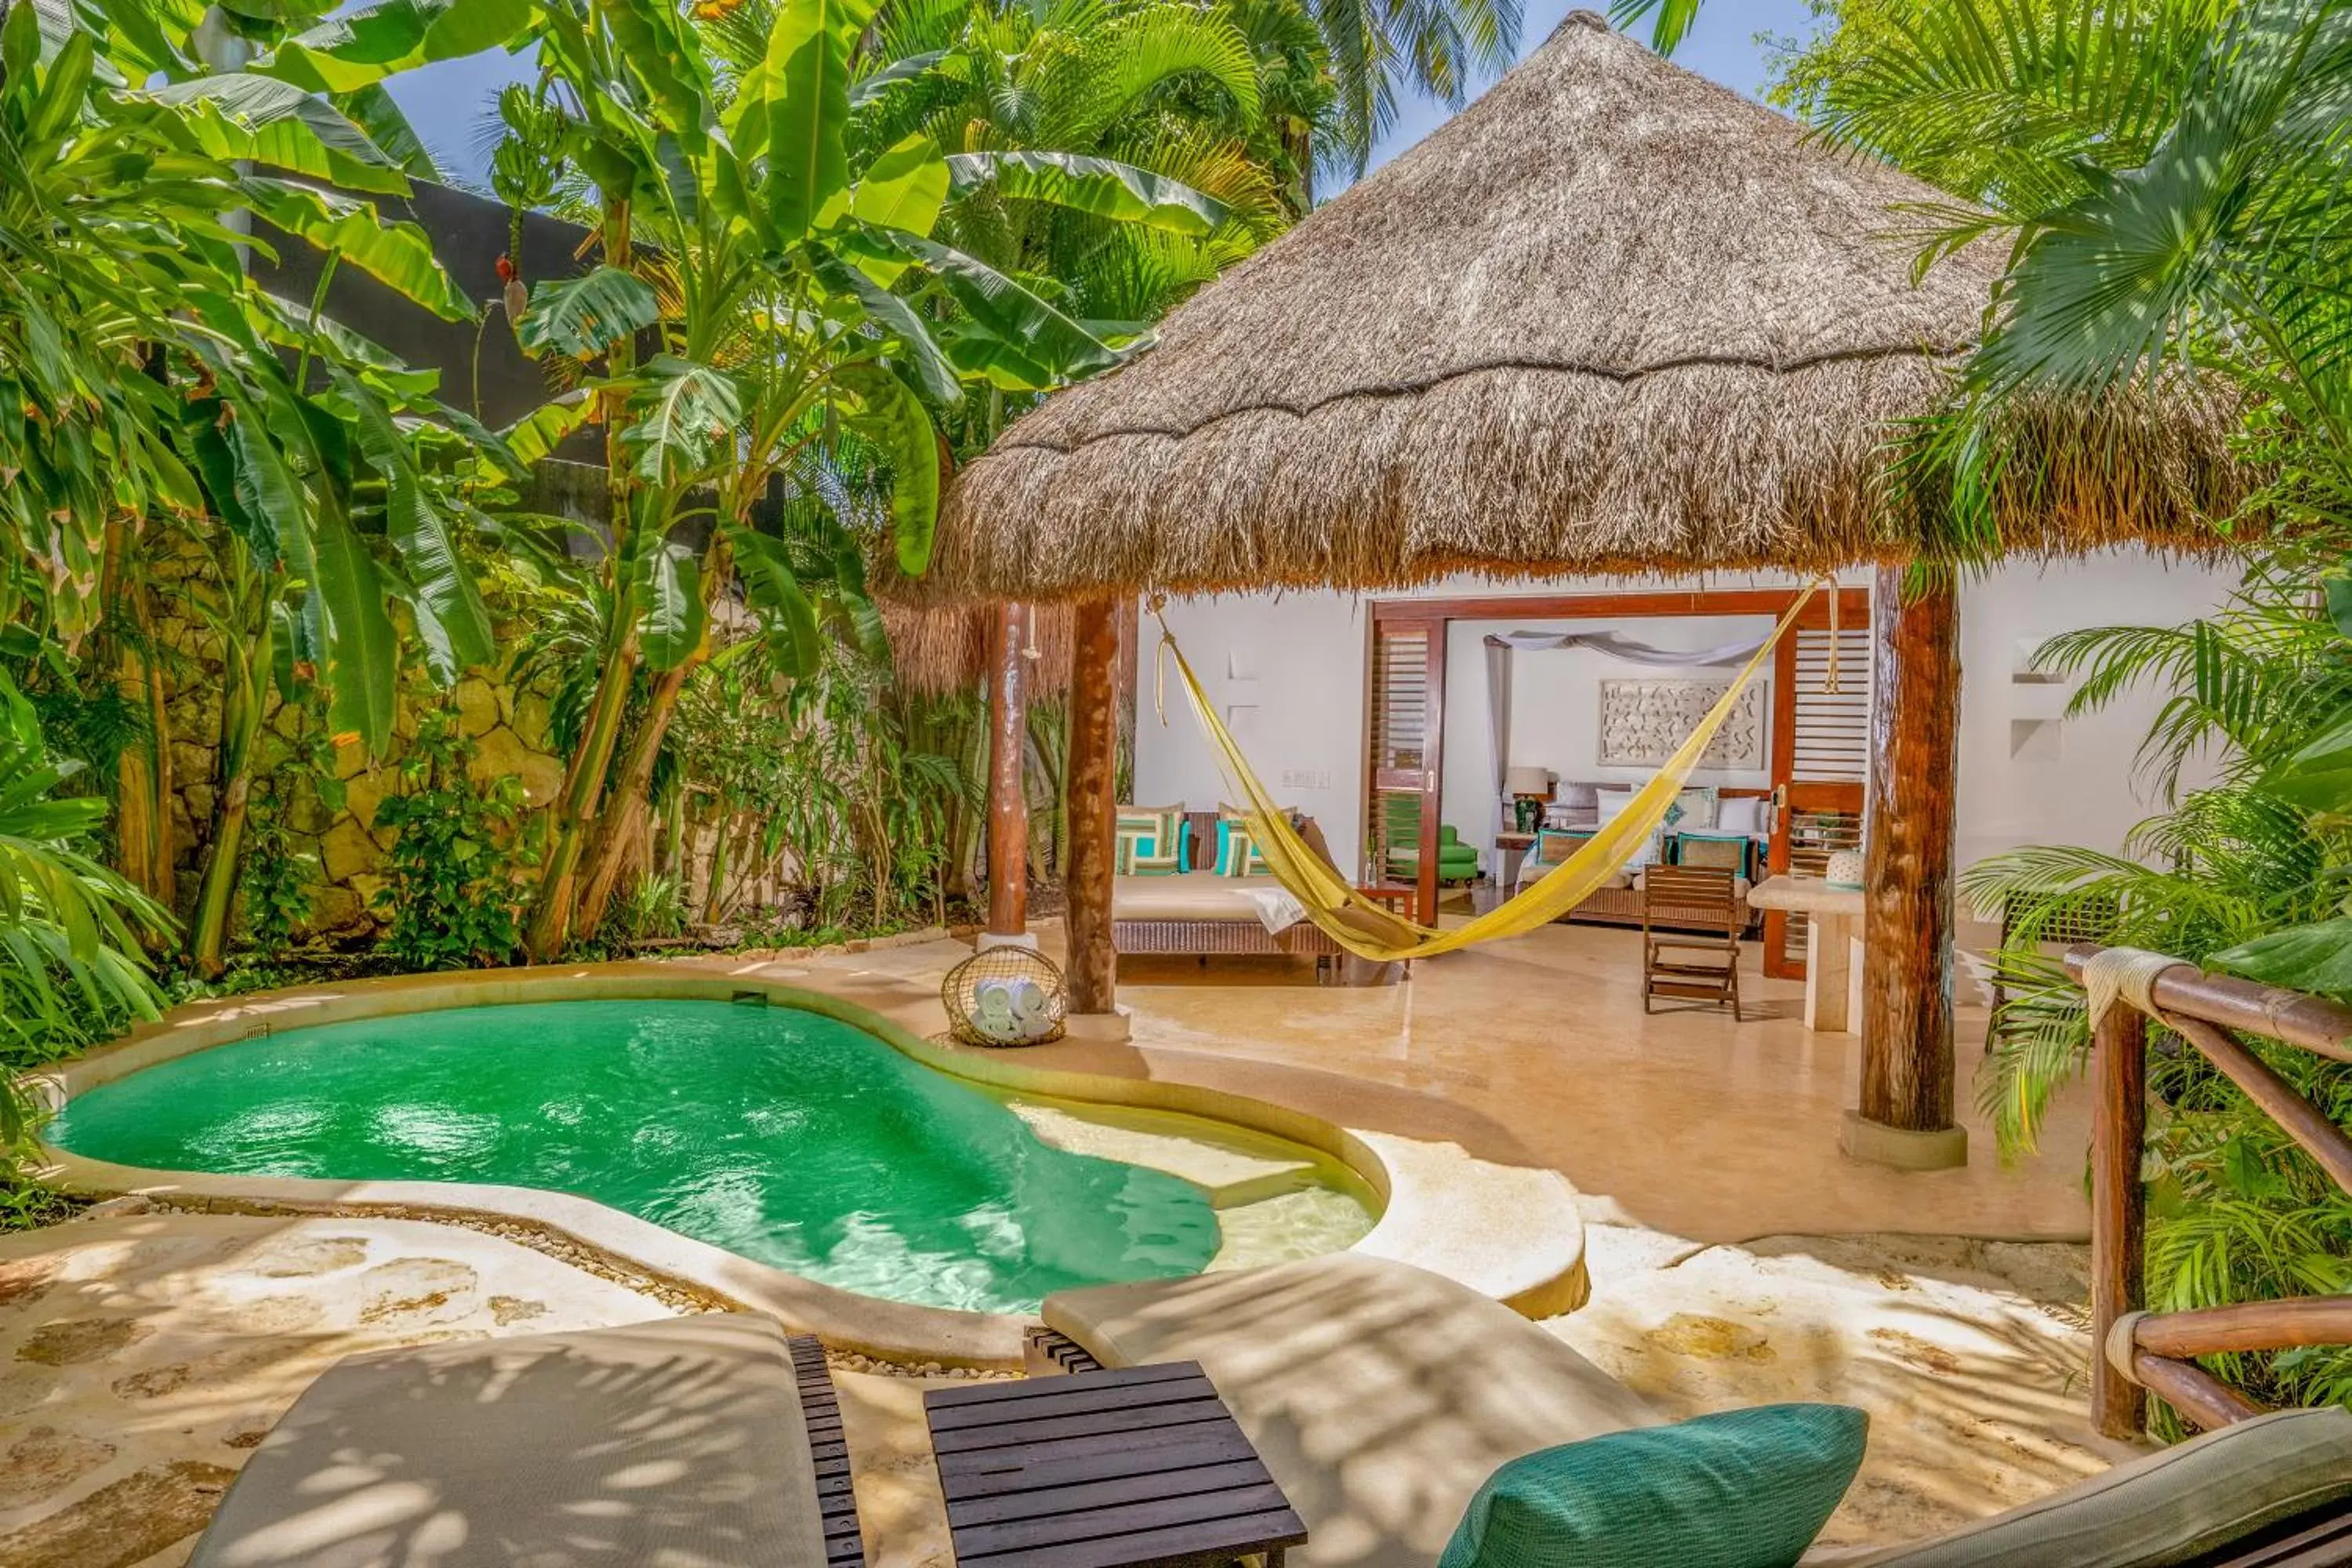 Swimming Pool in Viceroy Riviera Maya, a Luxury Villa Resort